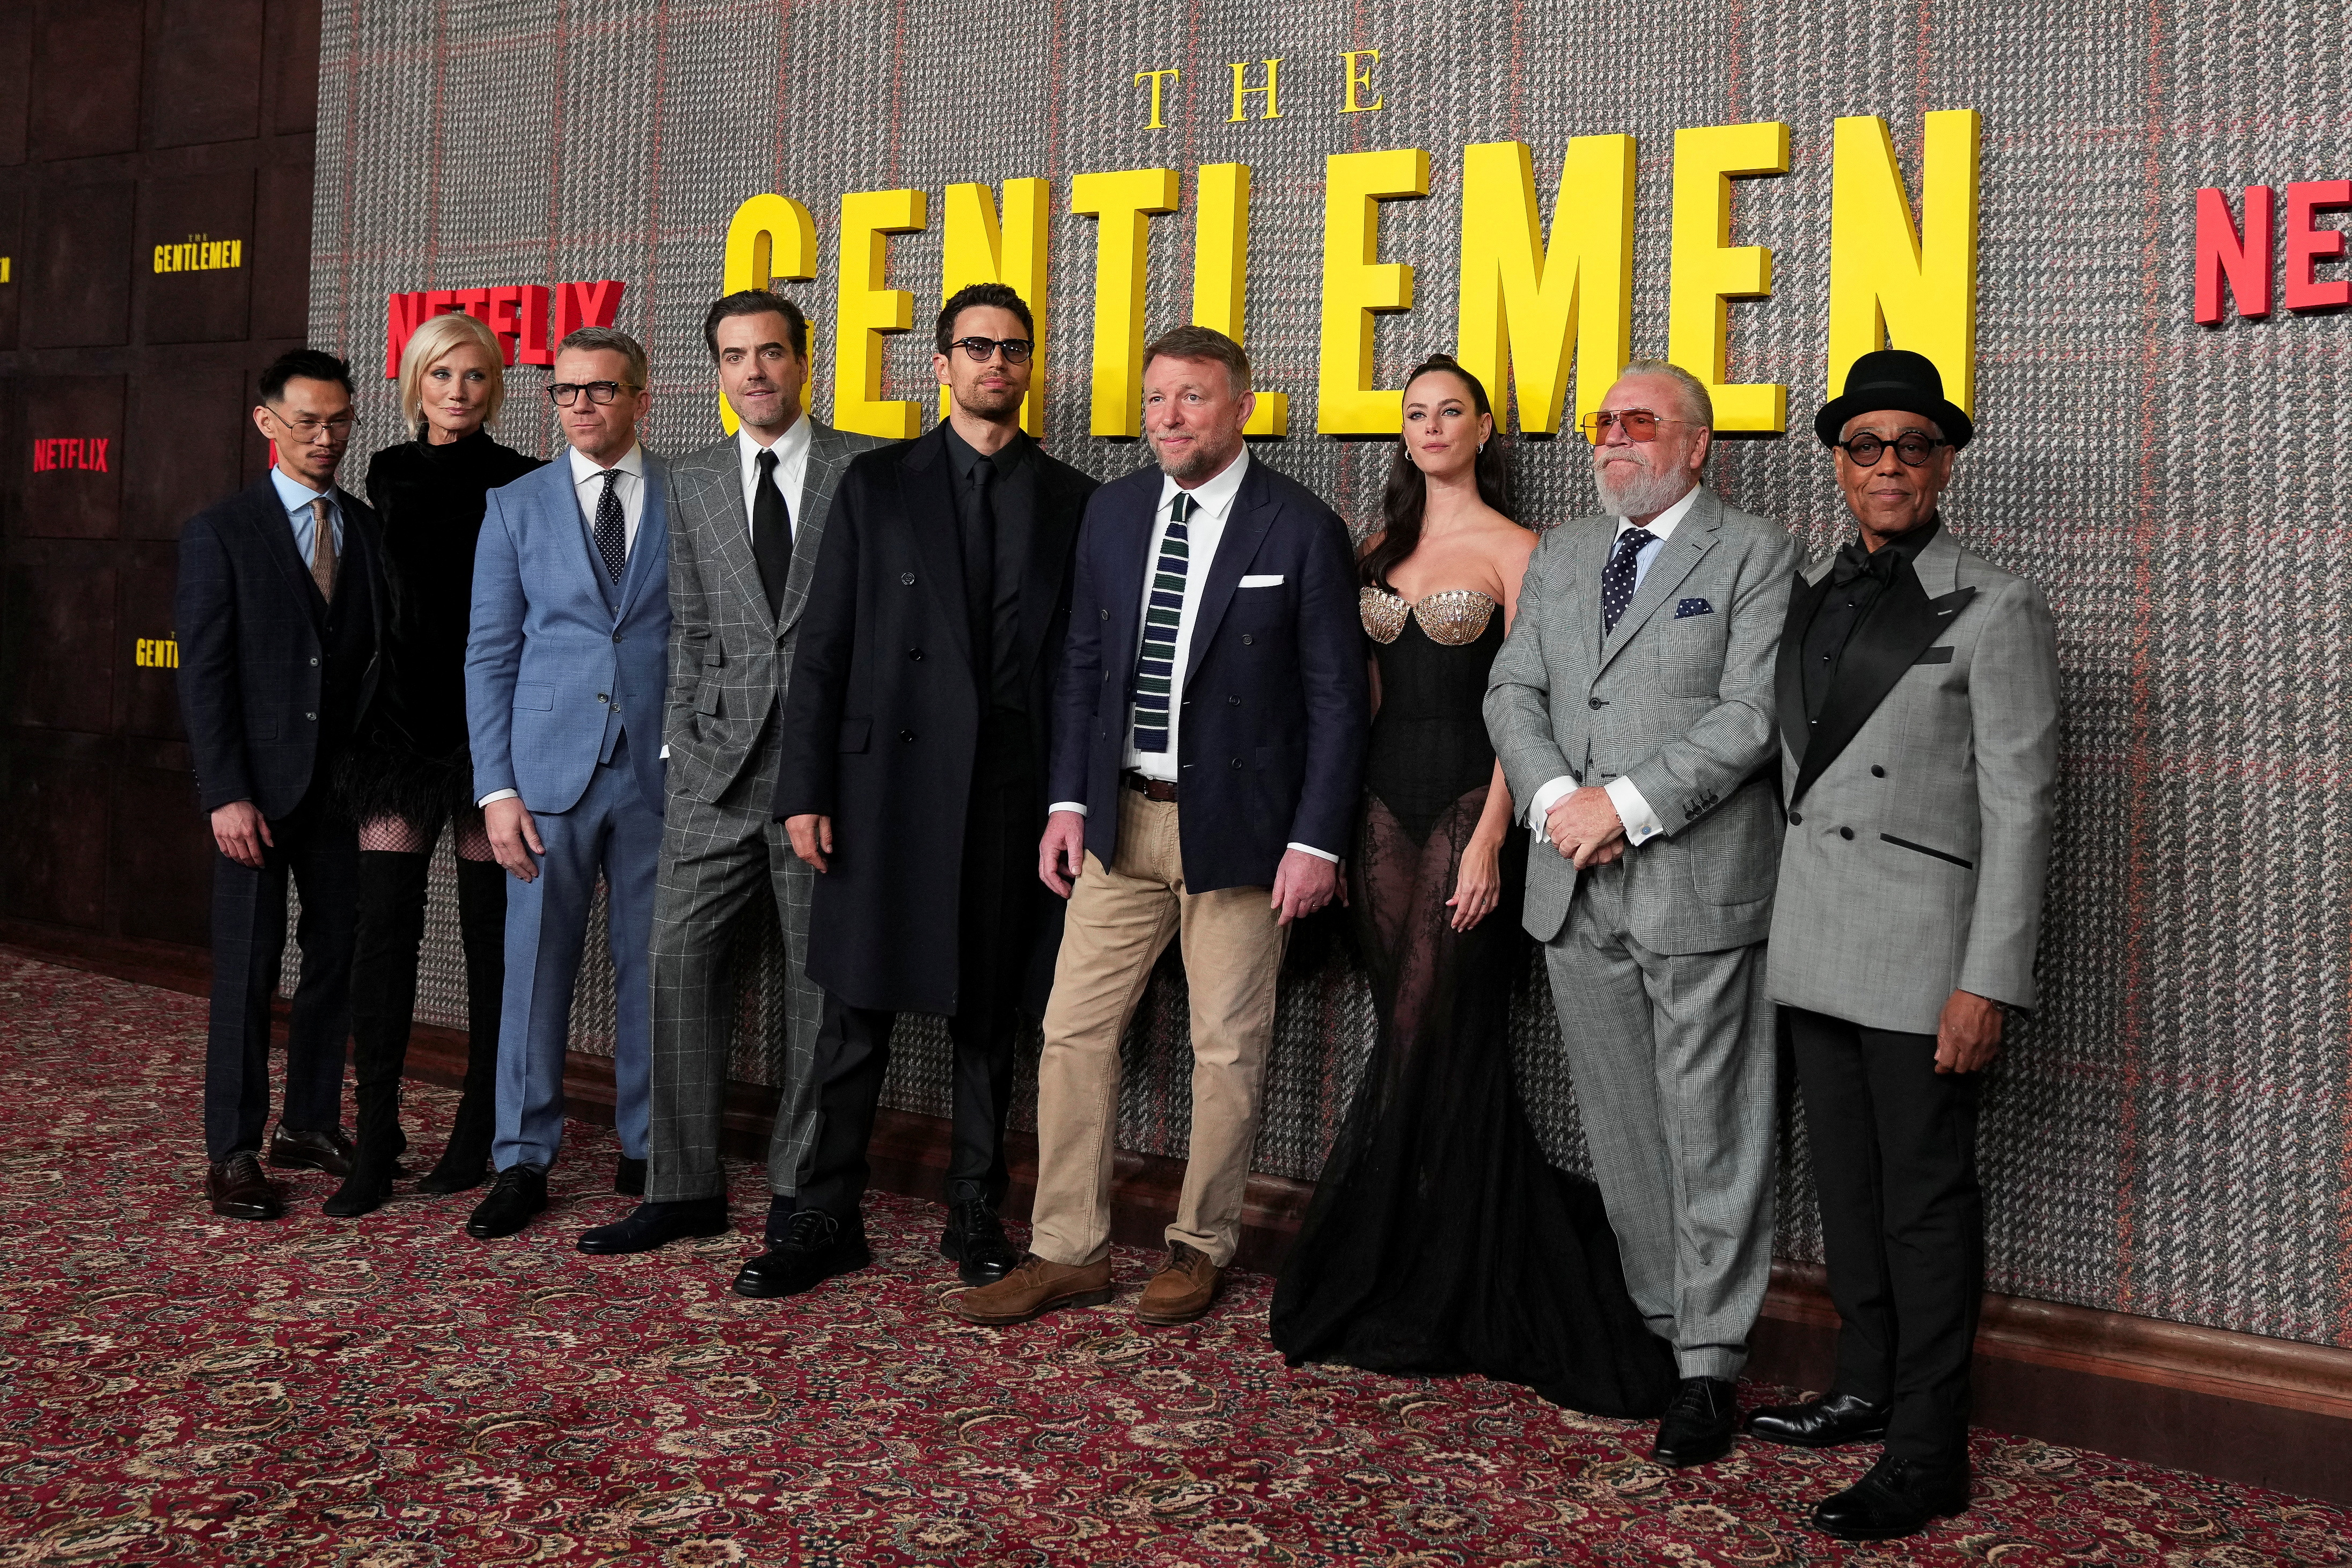 Premiere of the TV series "The Gentlemen" in London